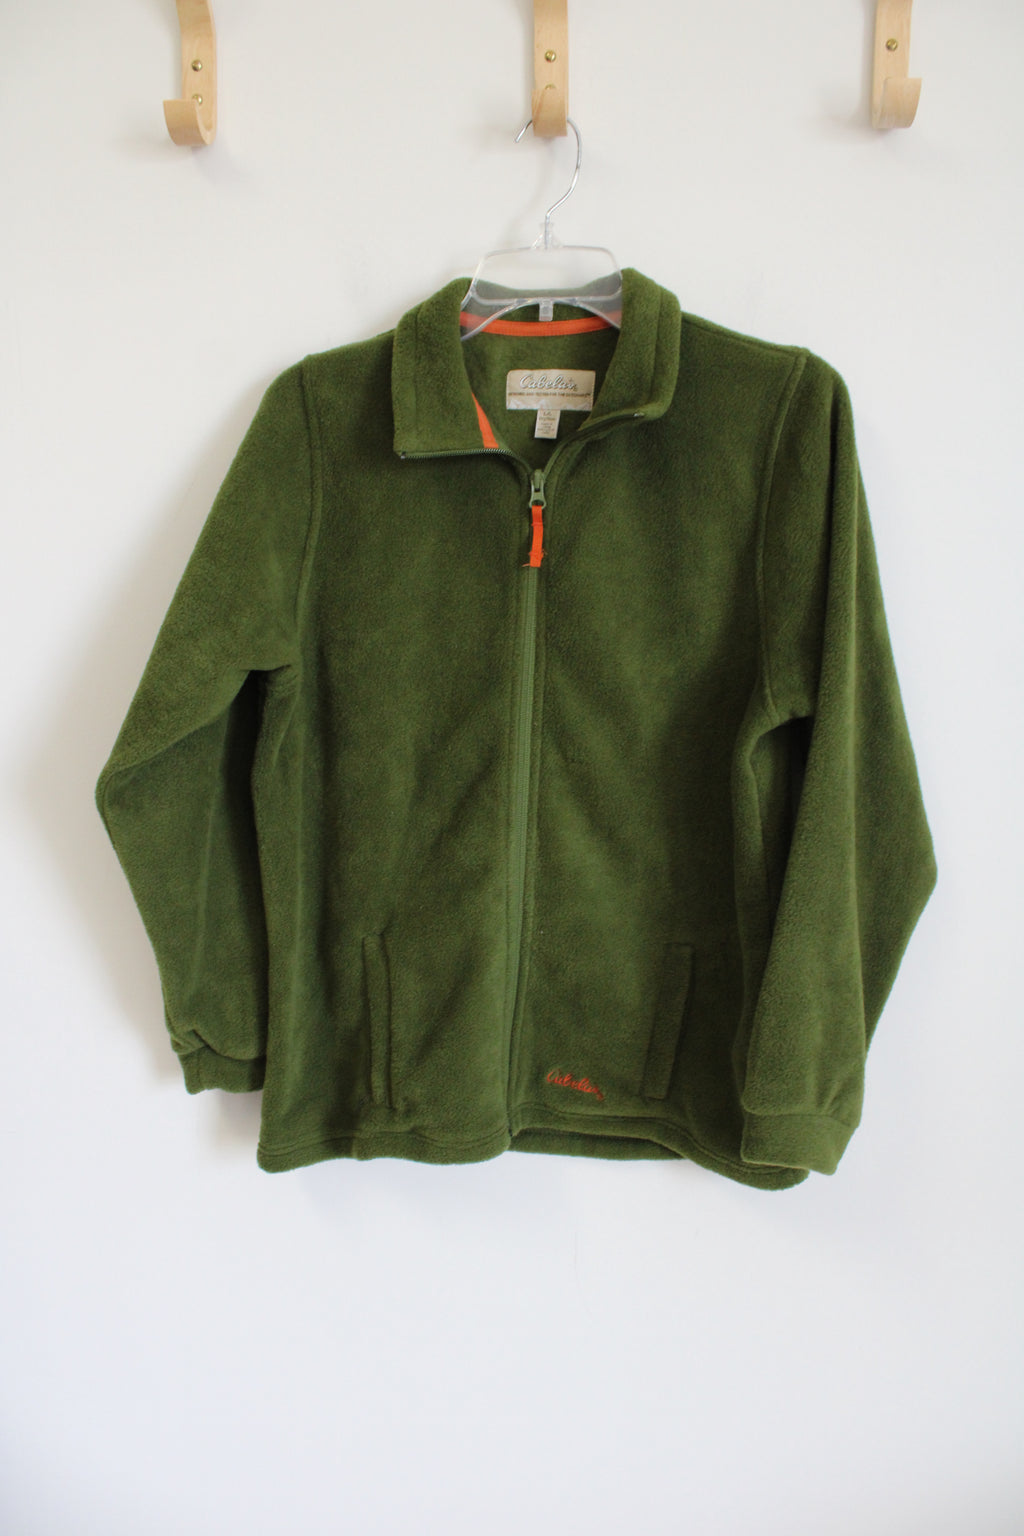 Cabela's Green Fleece Zip Up Jacket | Youth L (14/16)